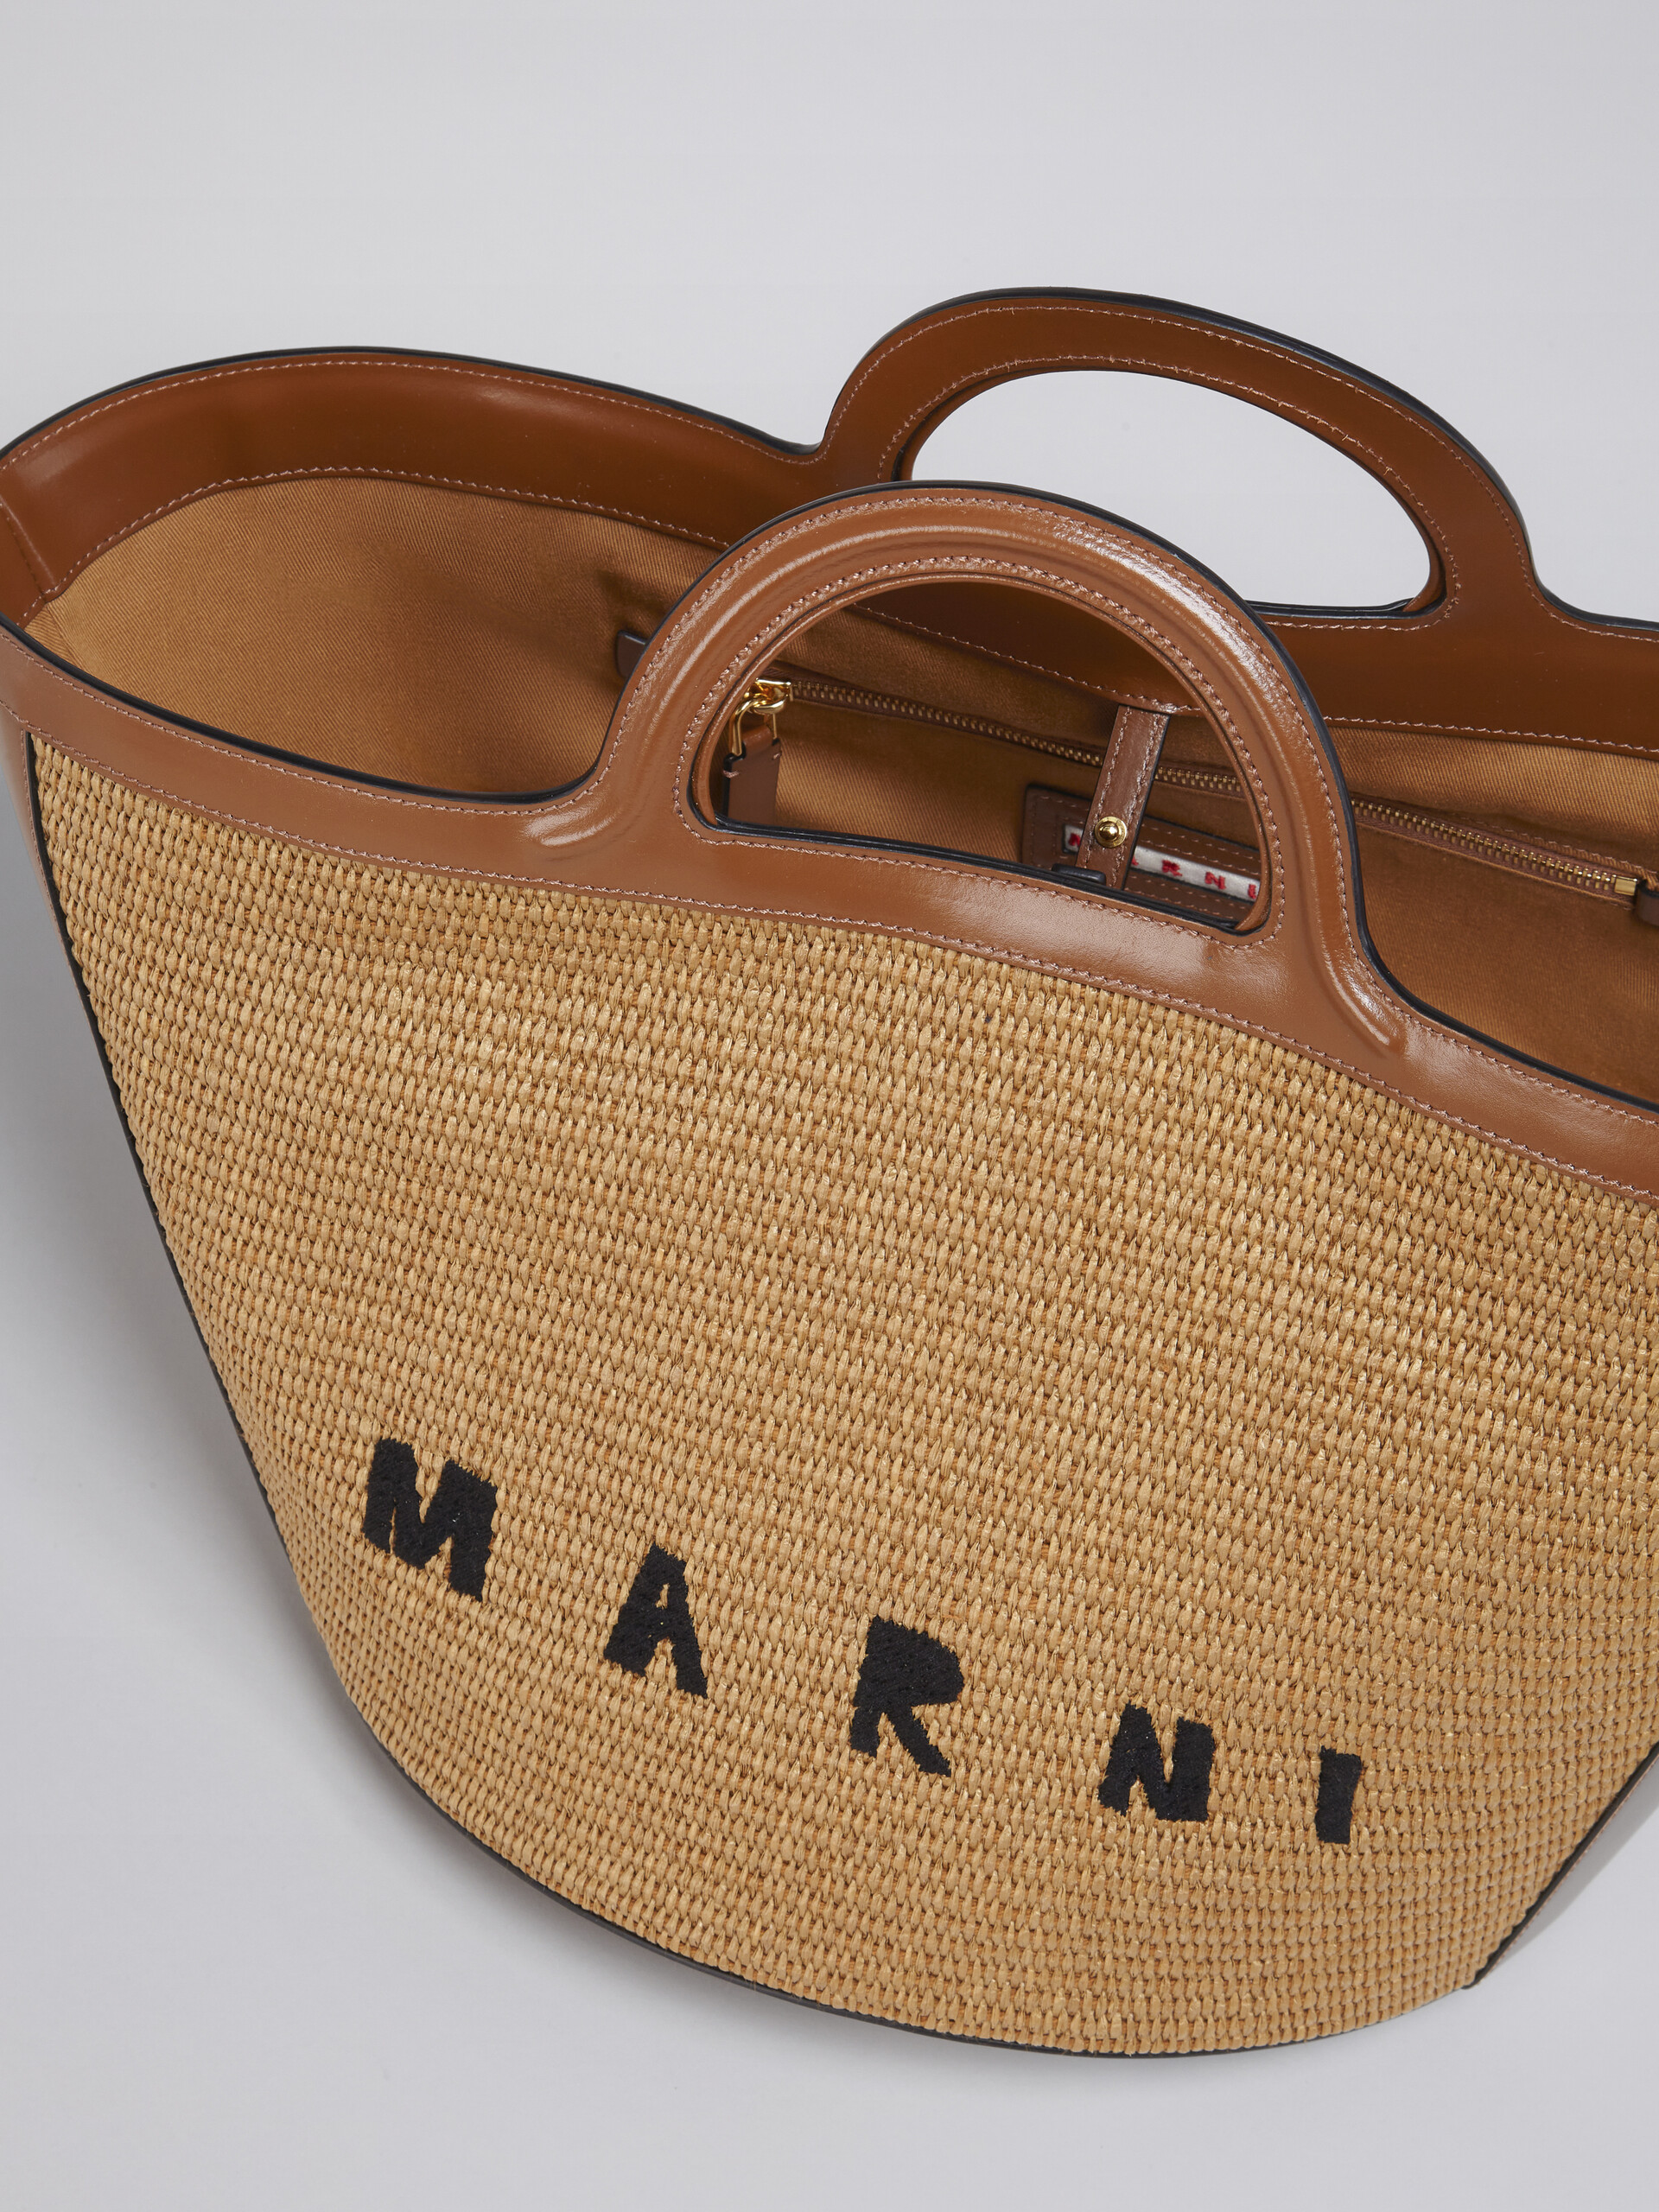 TROPICALIA large bag in brown leather and raffia - Handbag - Image 4